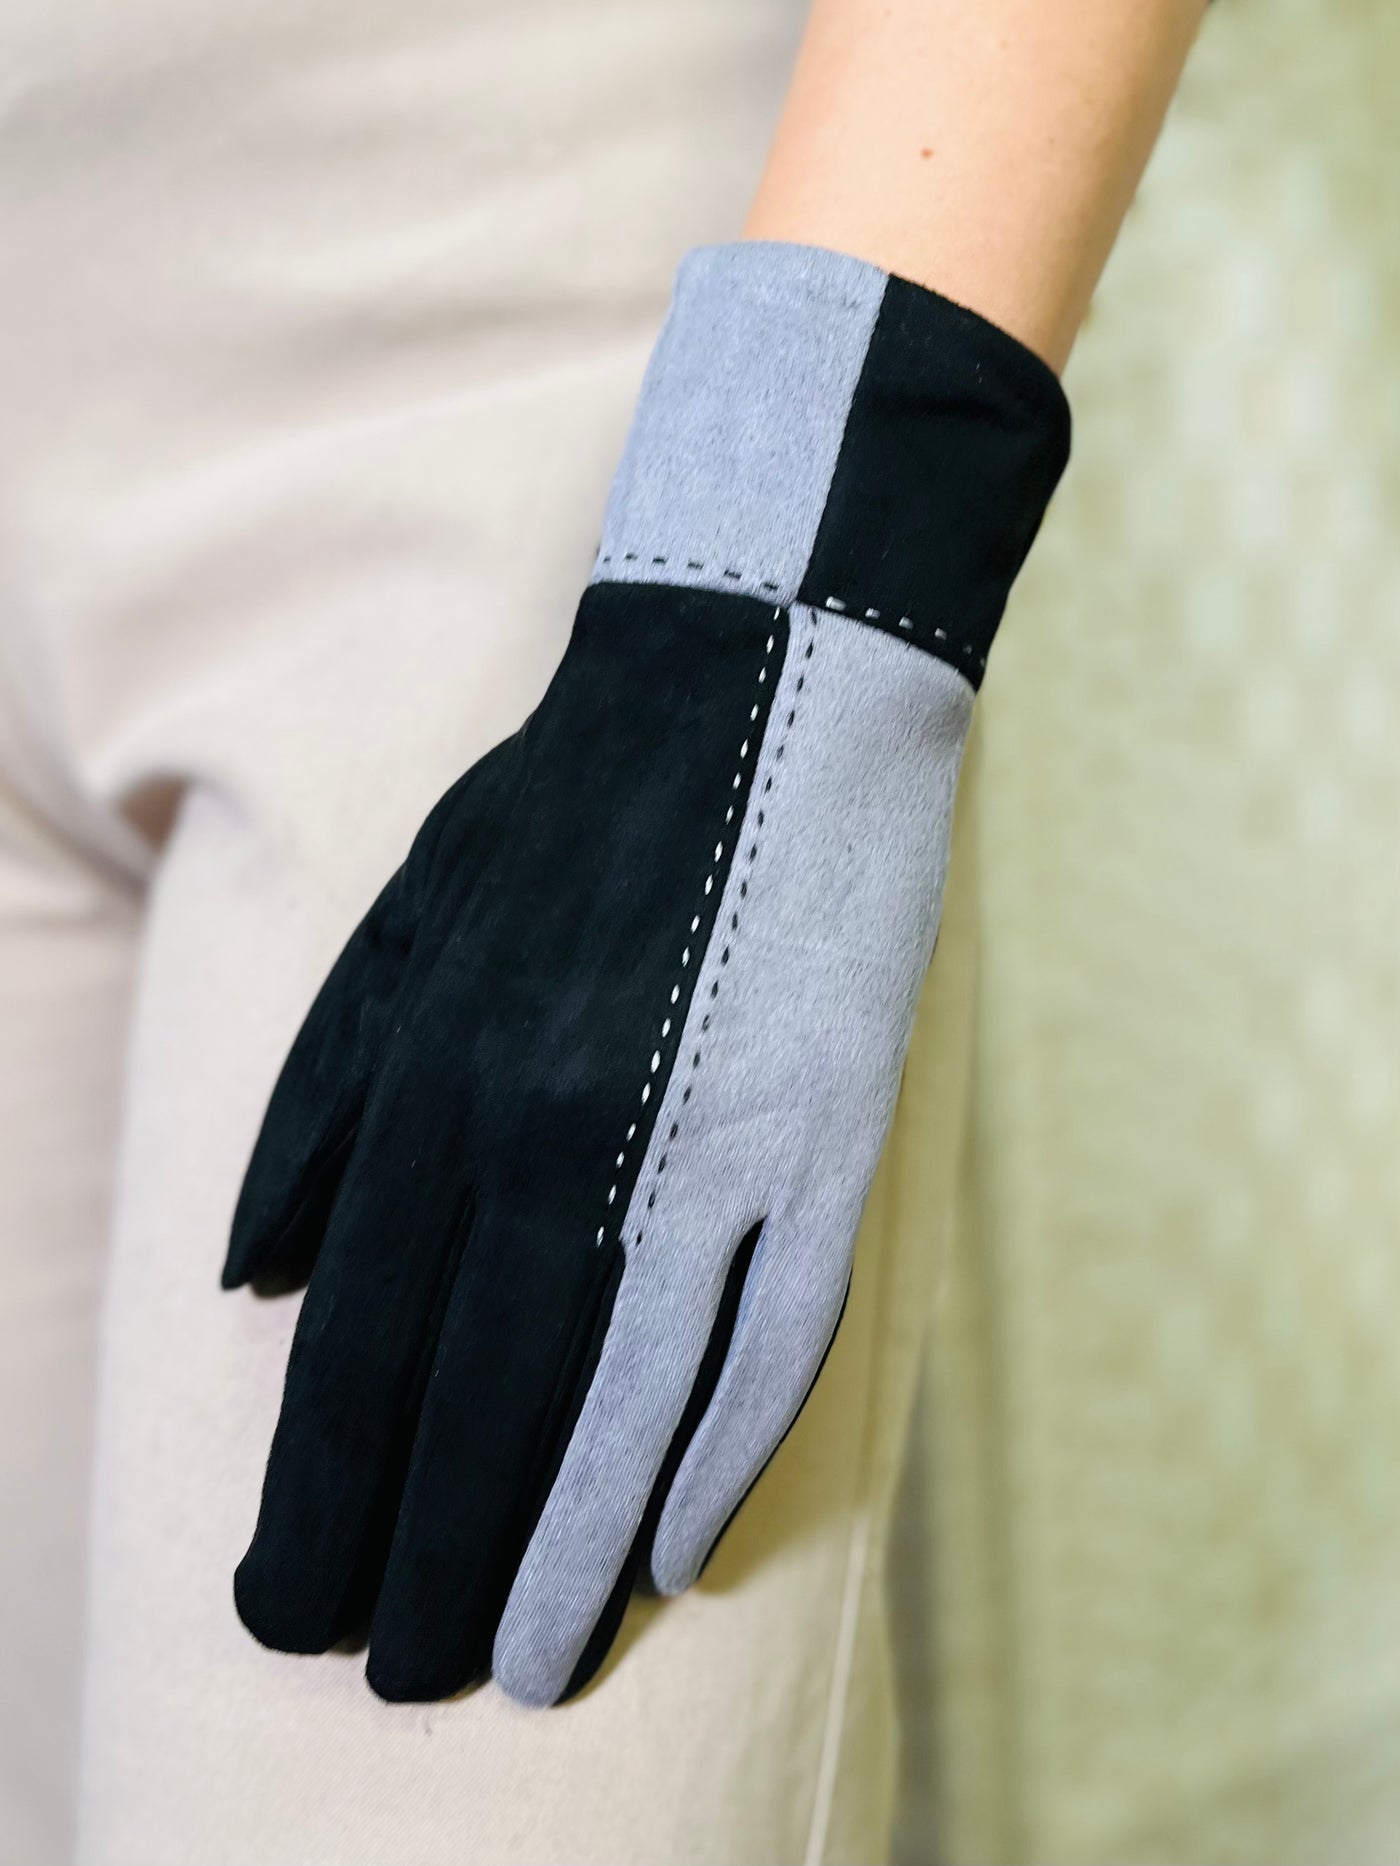 Block Print Gloves-Grey & Black